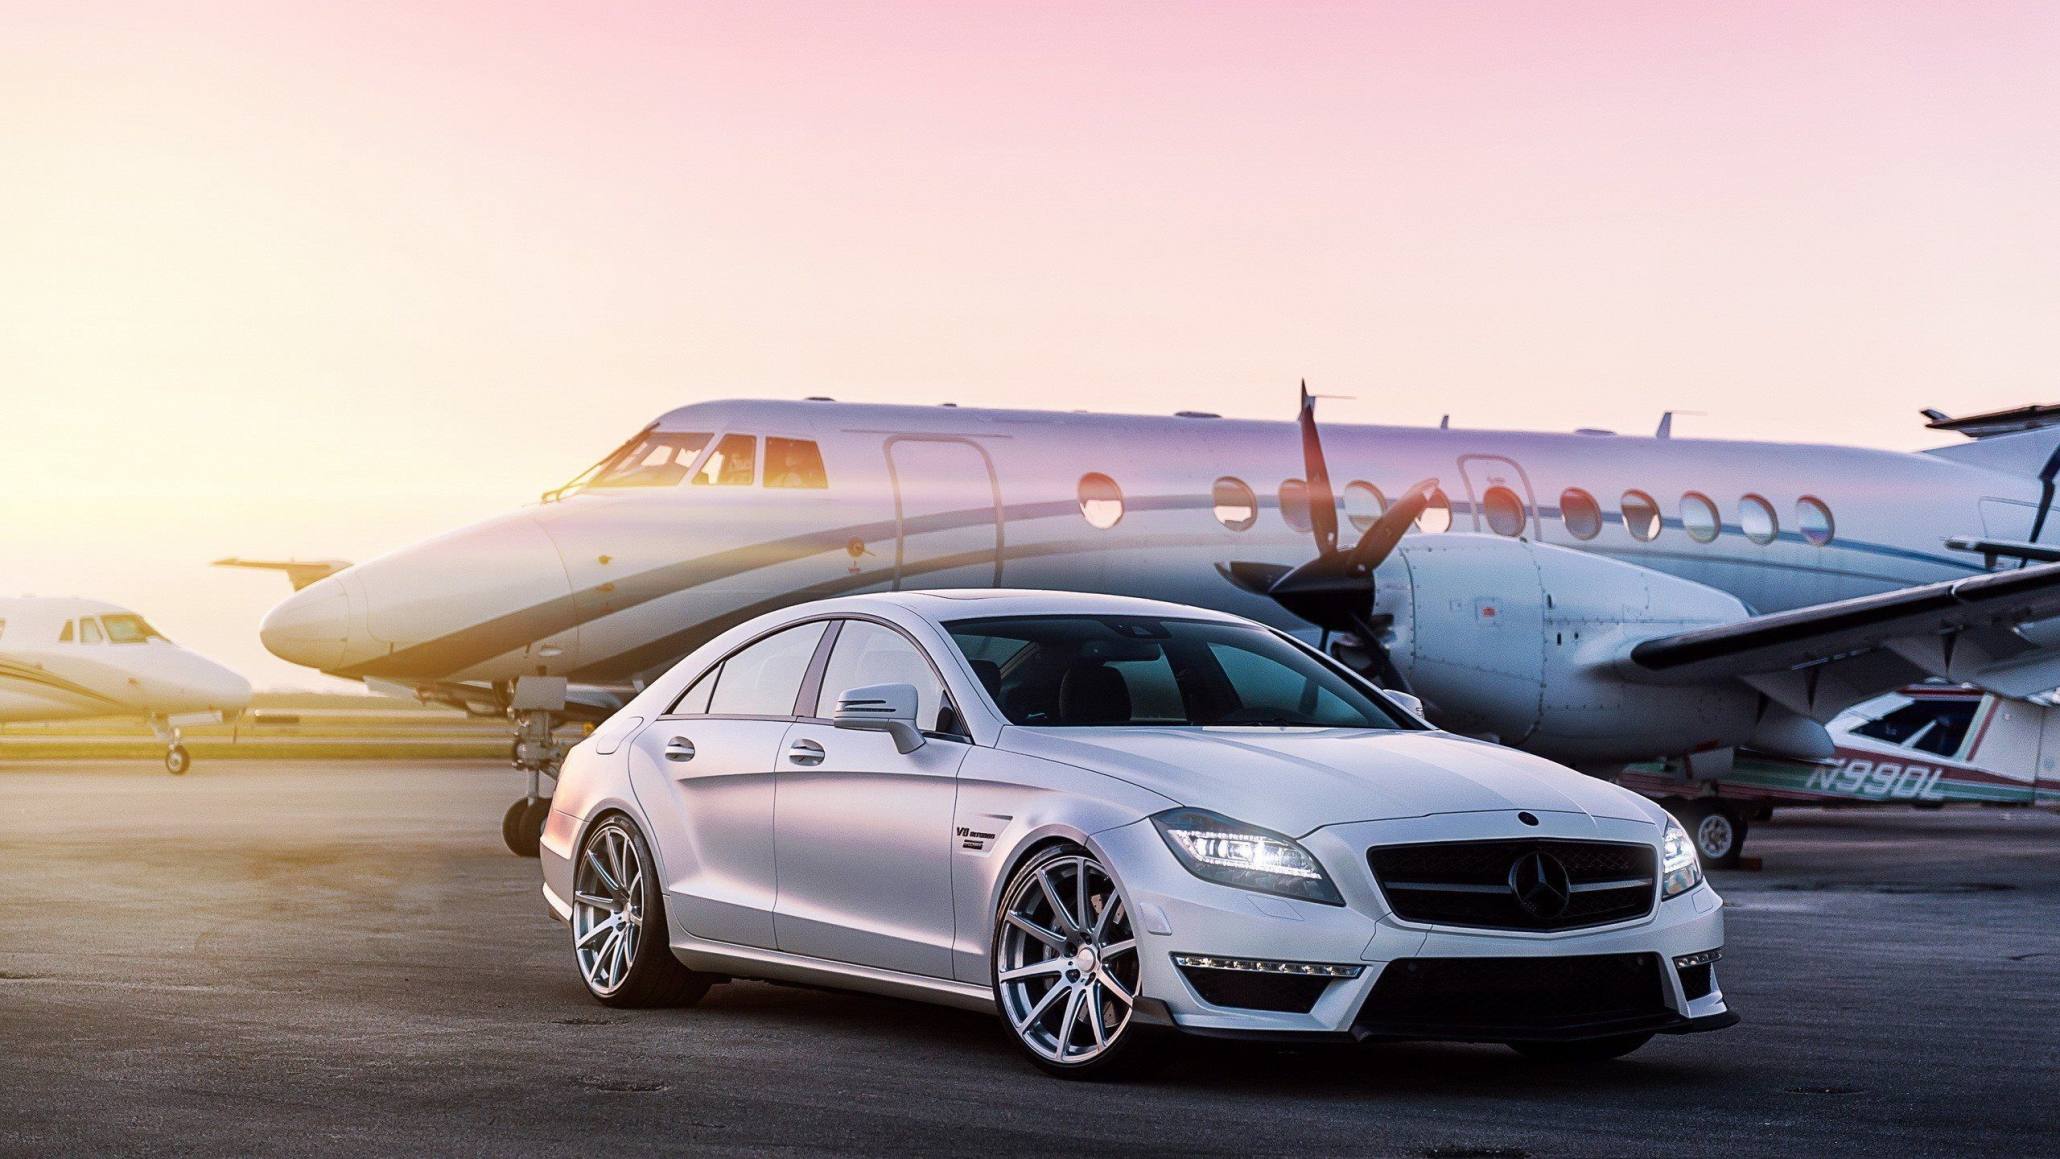 billionaire luxury lifestyle wallpaper